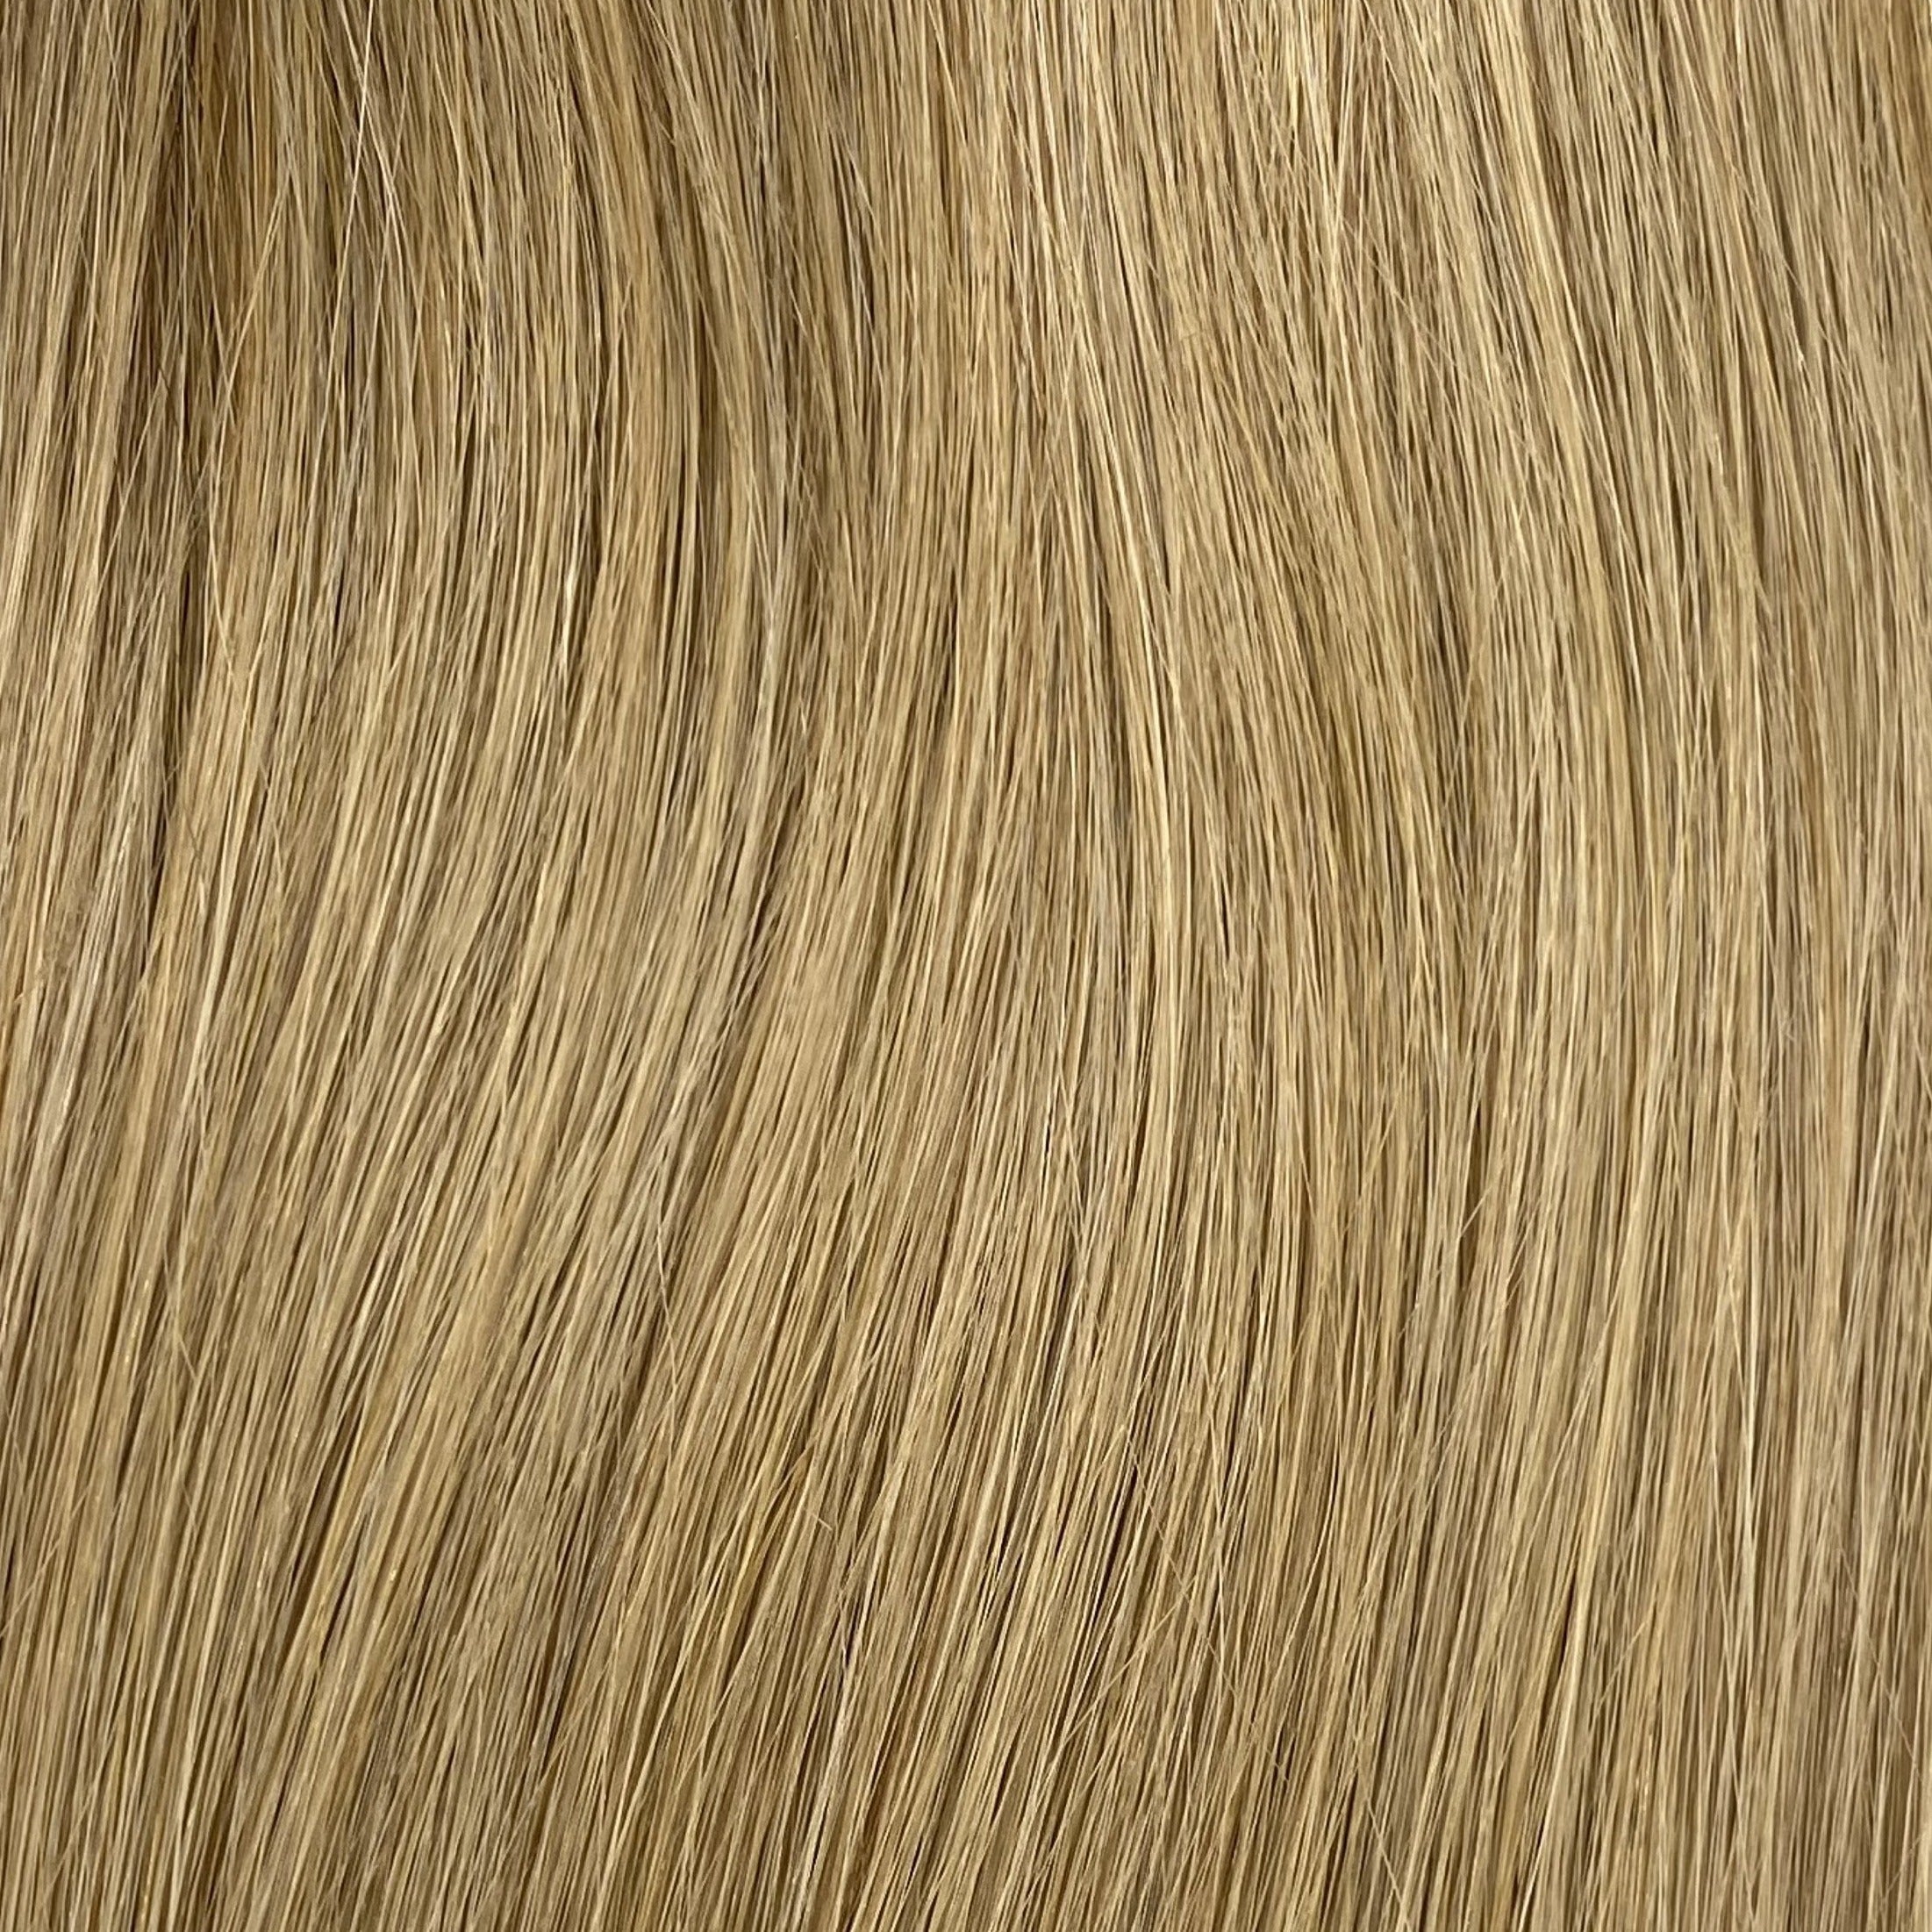 Velo Sale #10 - 20 inches - Dark Ash Blonde - Image 1